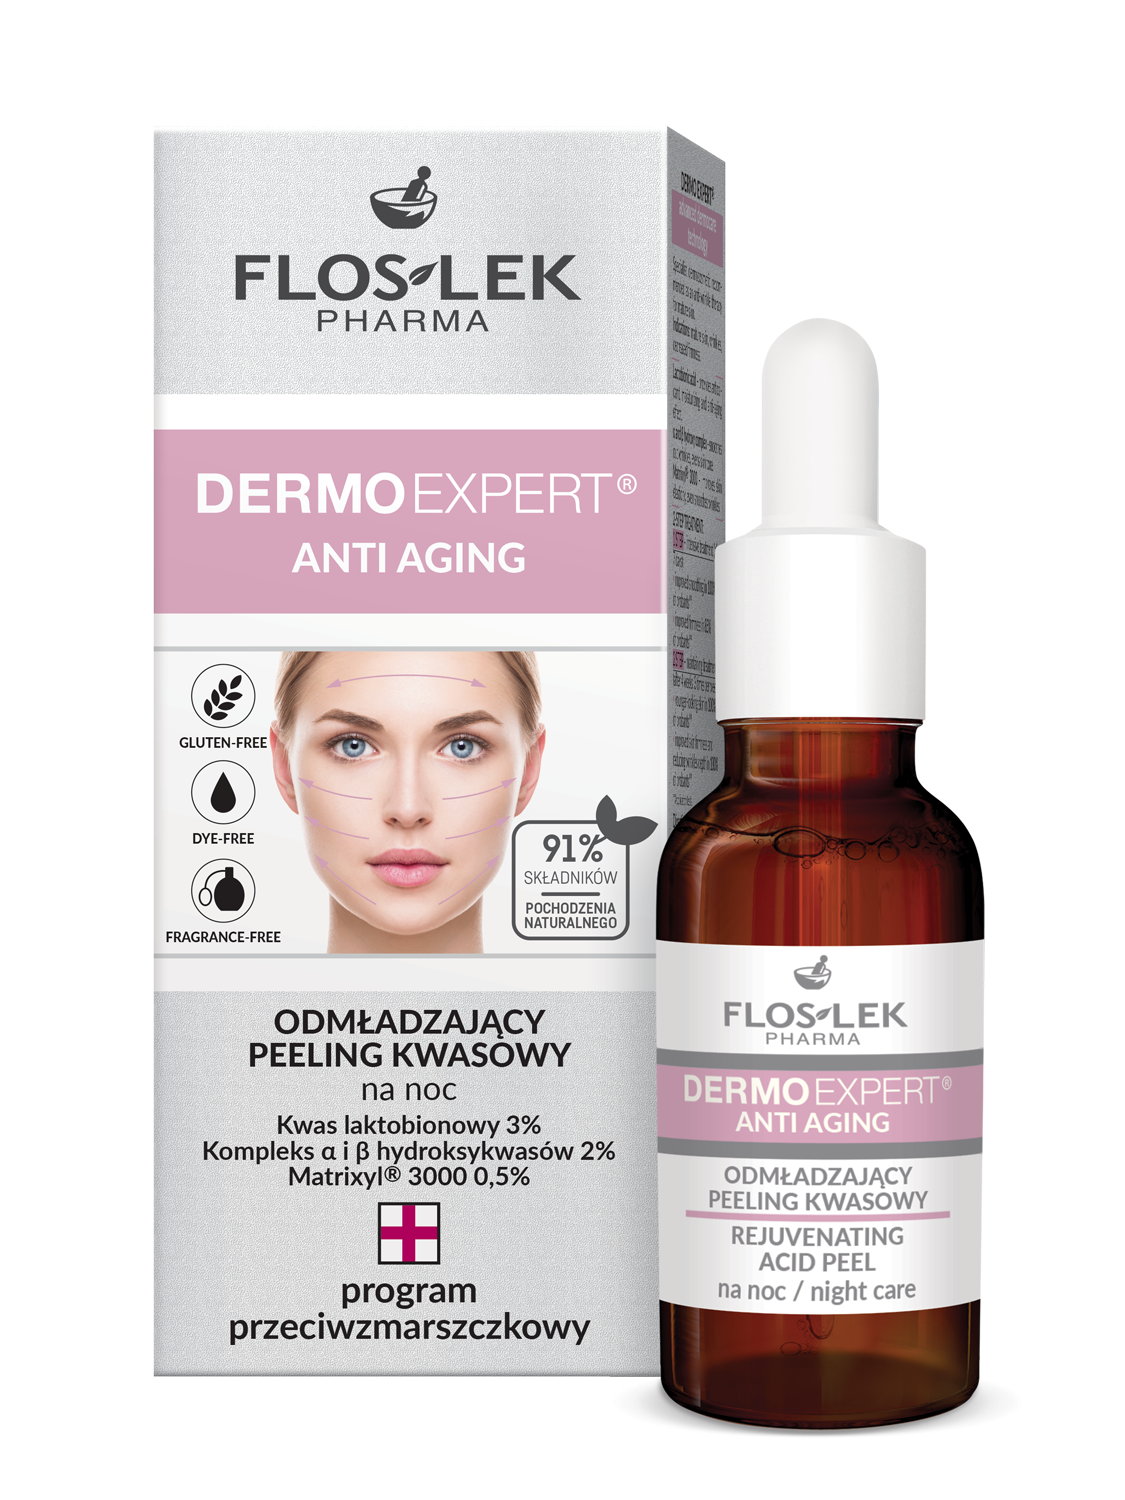 DERMO EXPERT® ANTI AGING Rejuvenating acid peel night care - 30 ml - Floslek